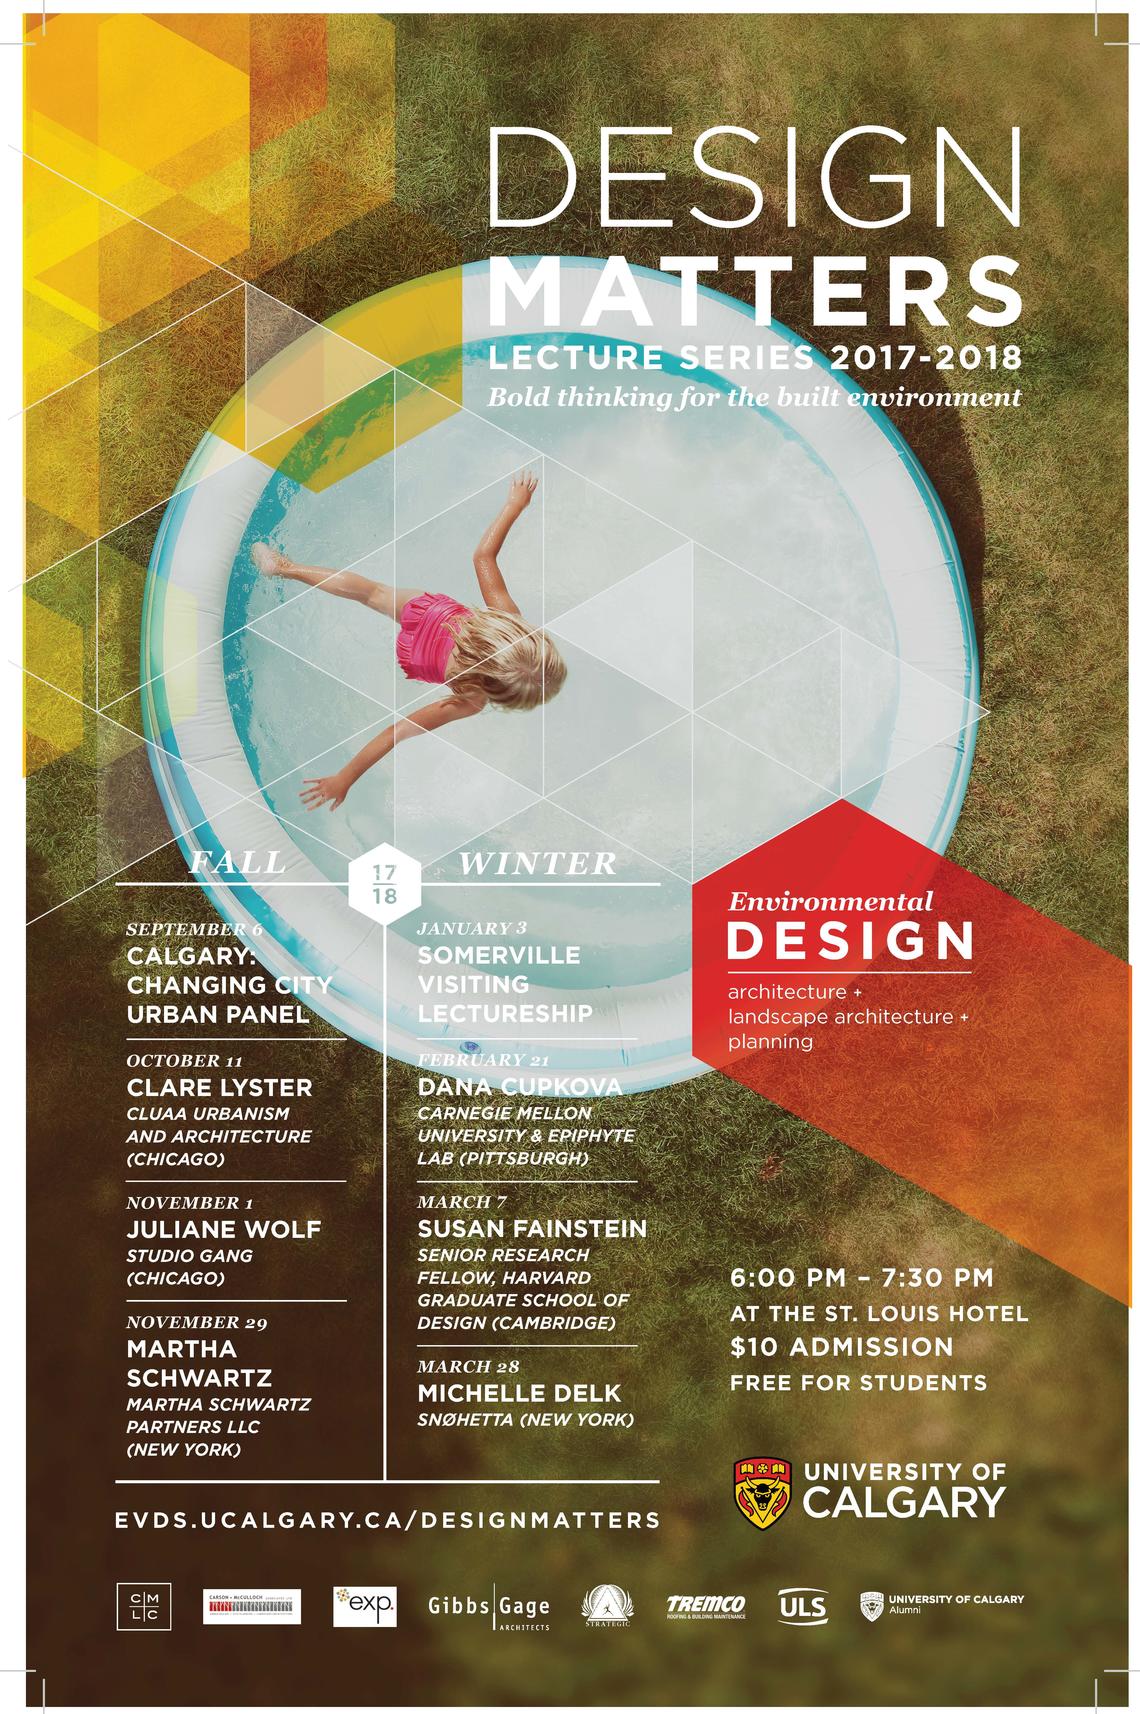 Design Matters 2017/18